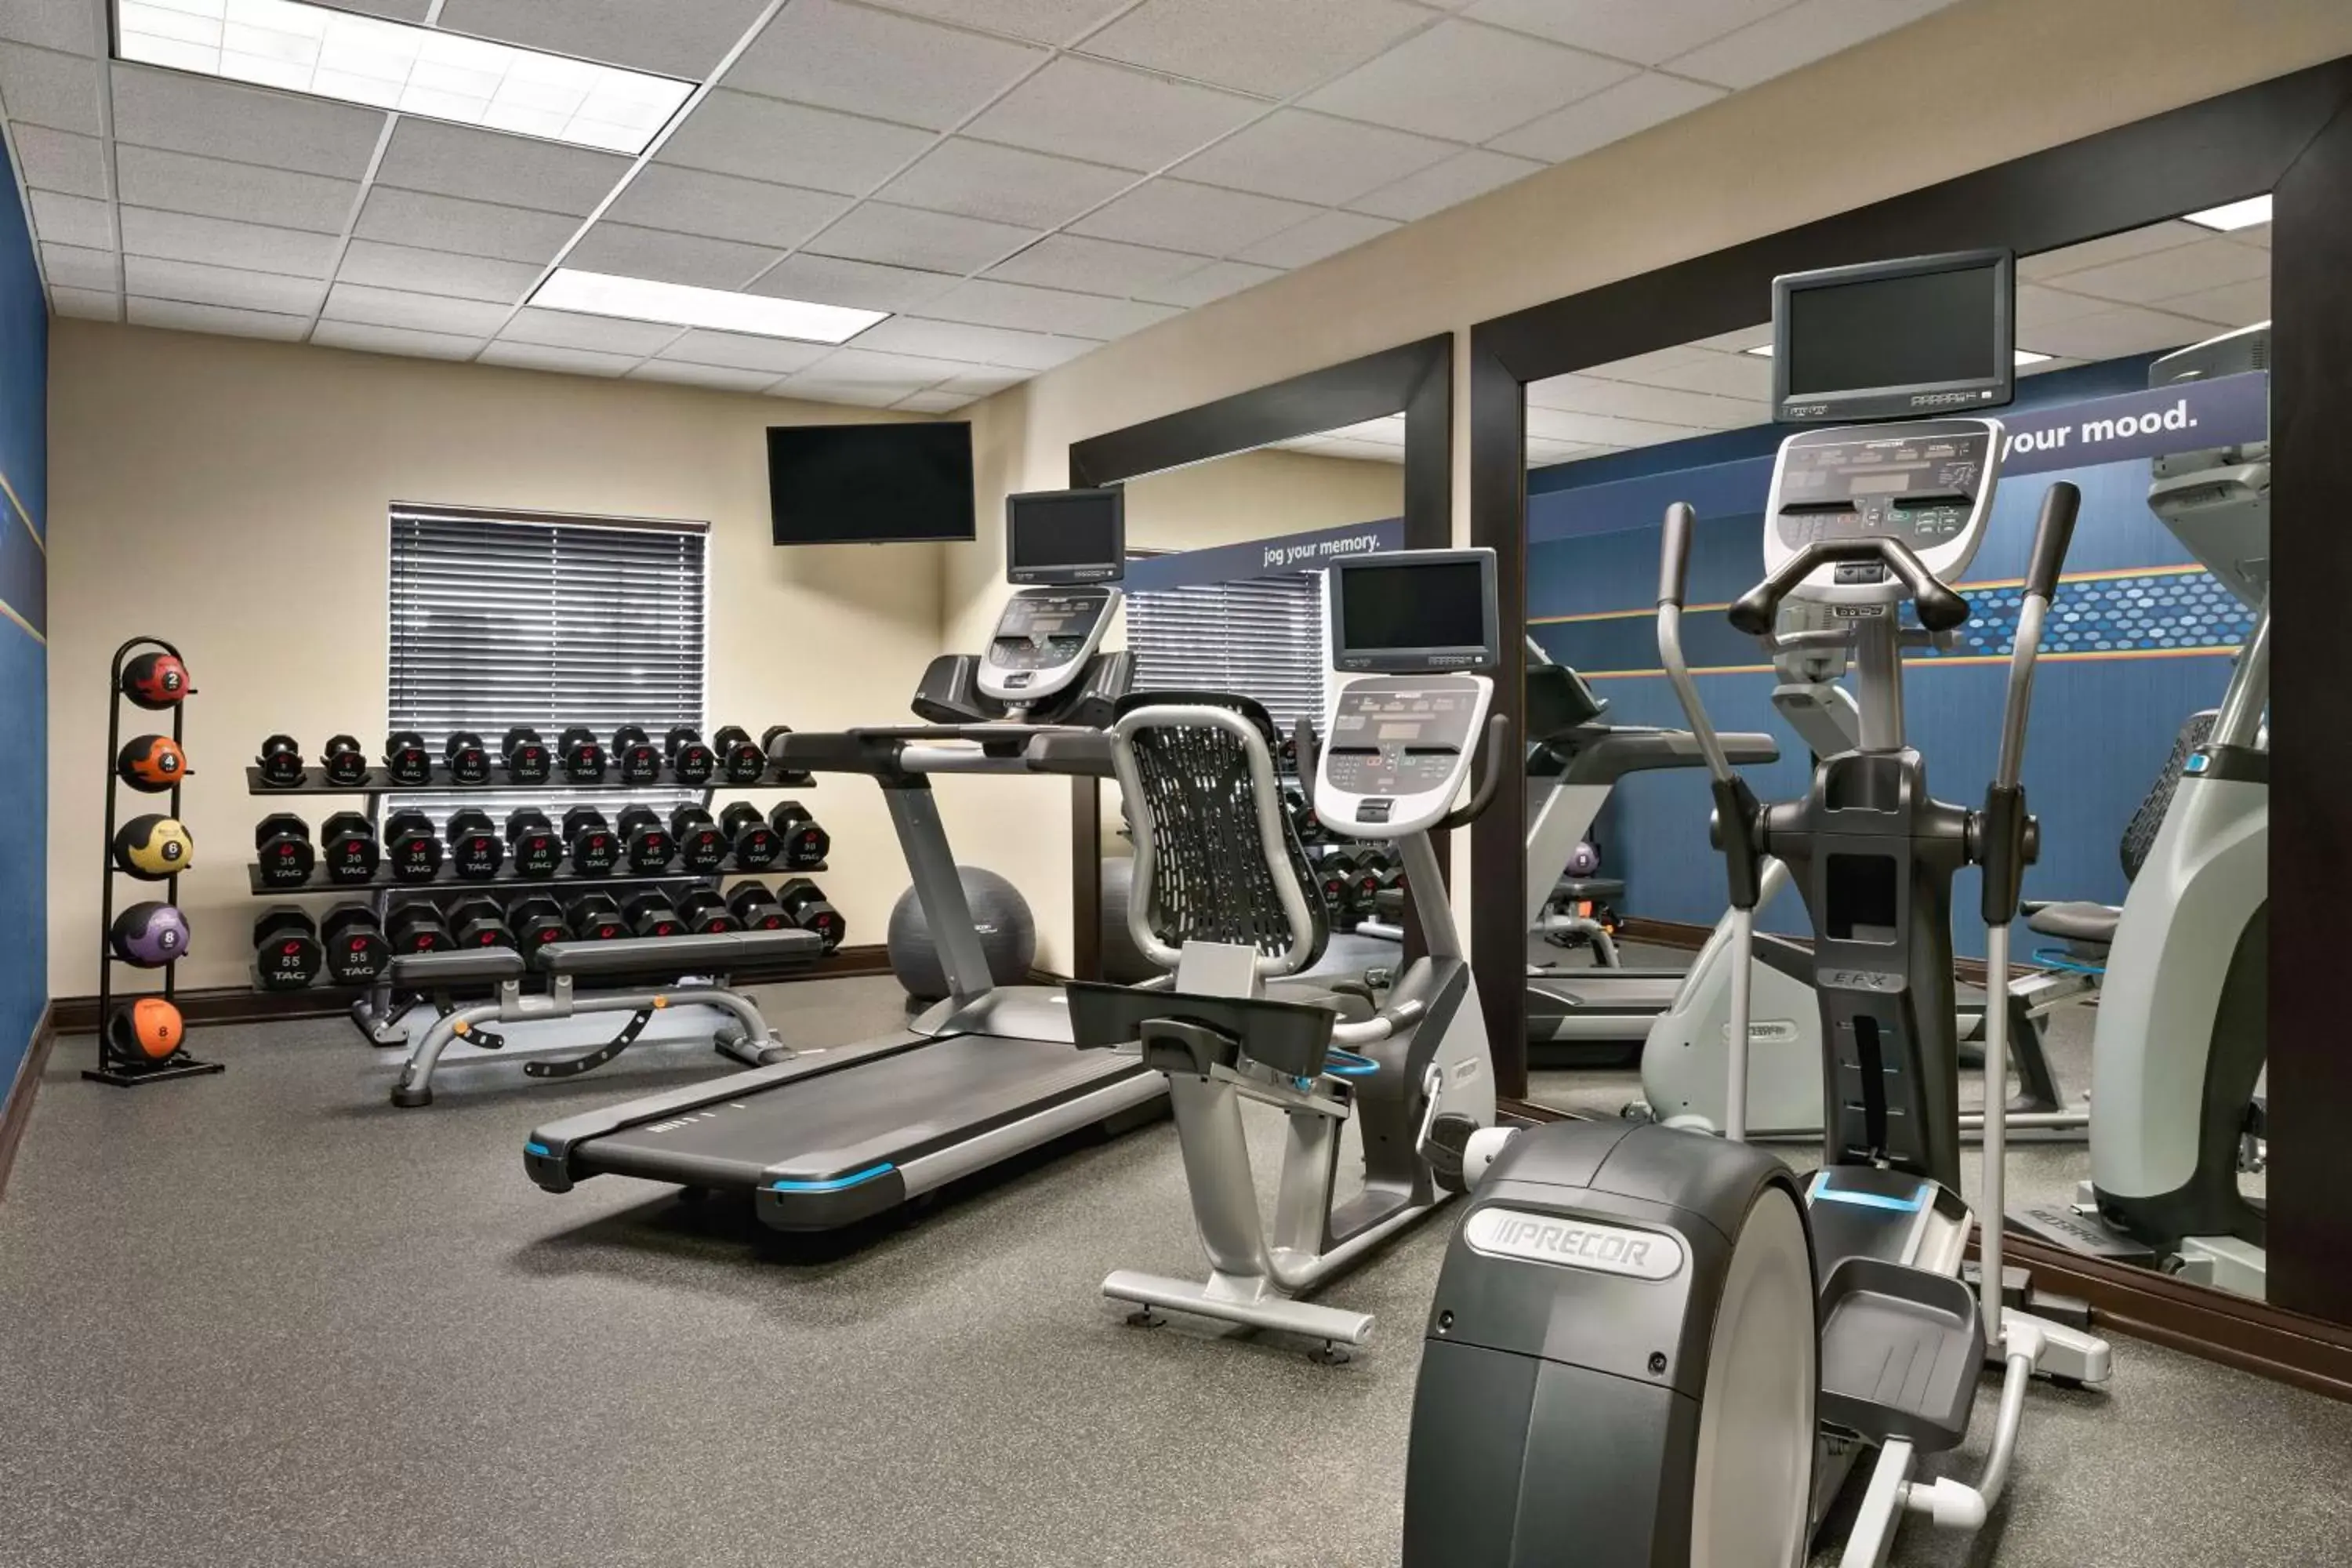 Fitness centre/facilities, Fitness Center/Facilities in Hampton Inn & Suites Atlanta Airport West Camp Creek Pkwy